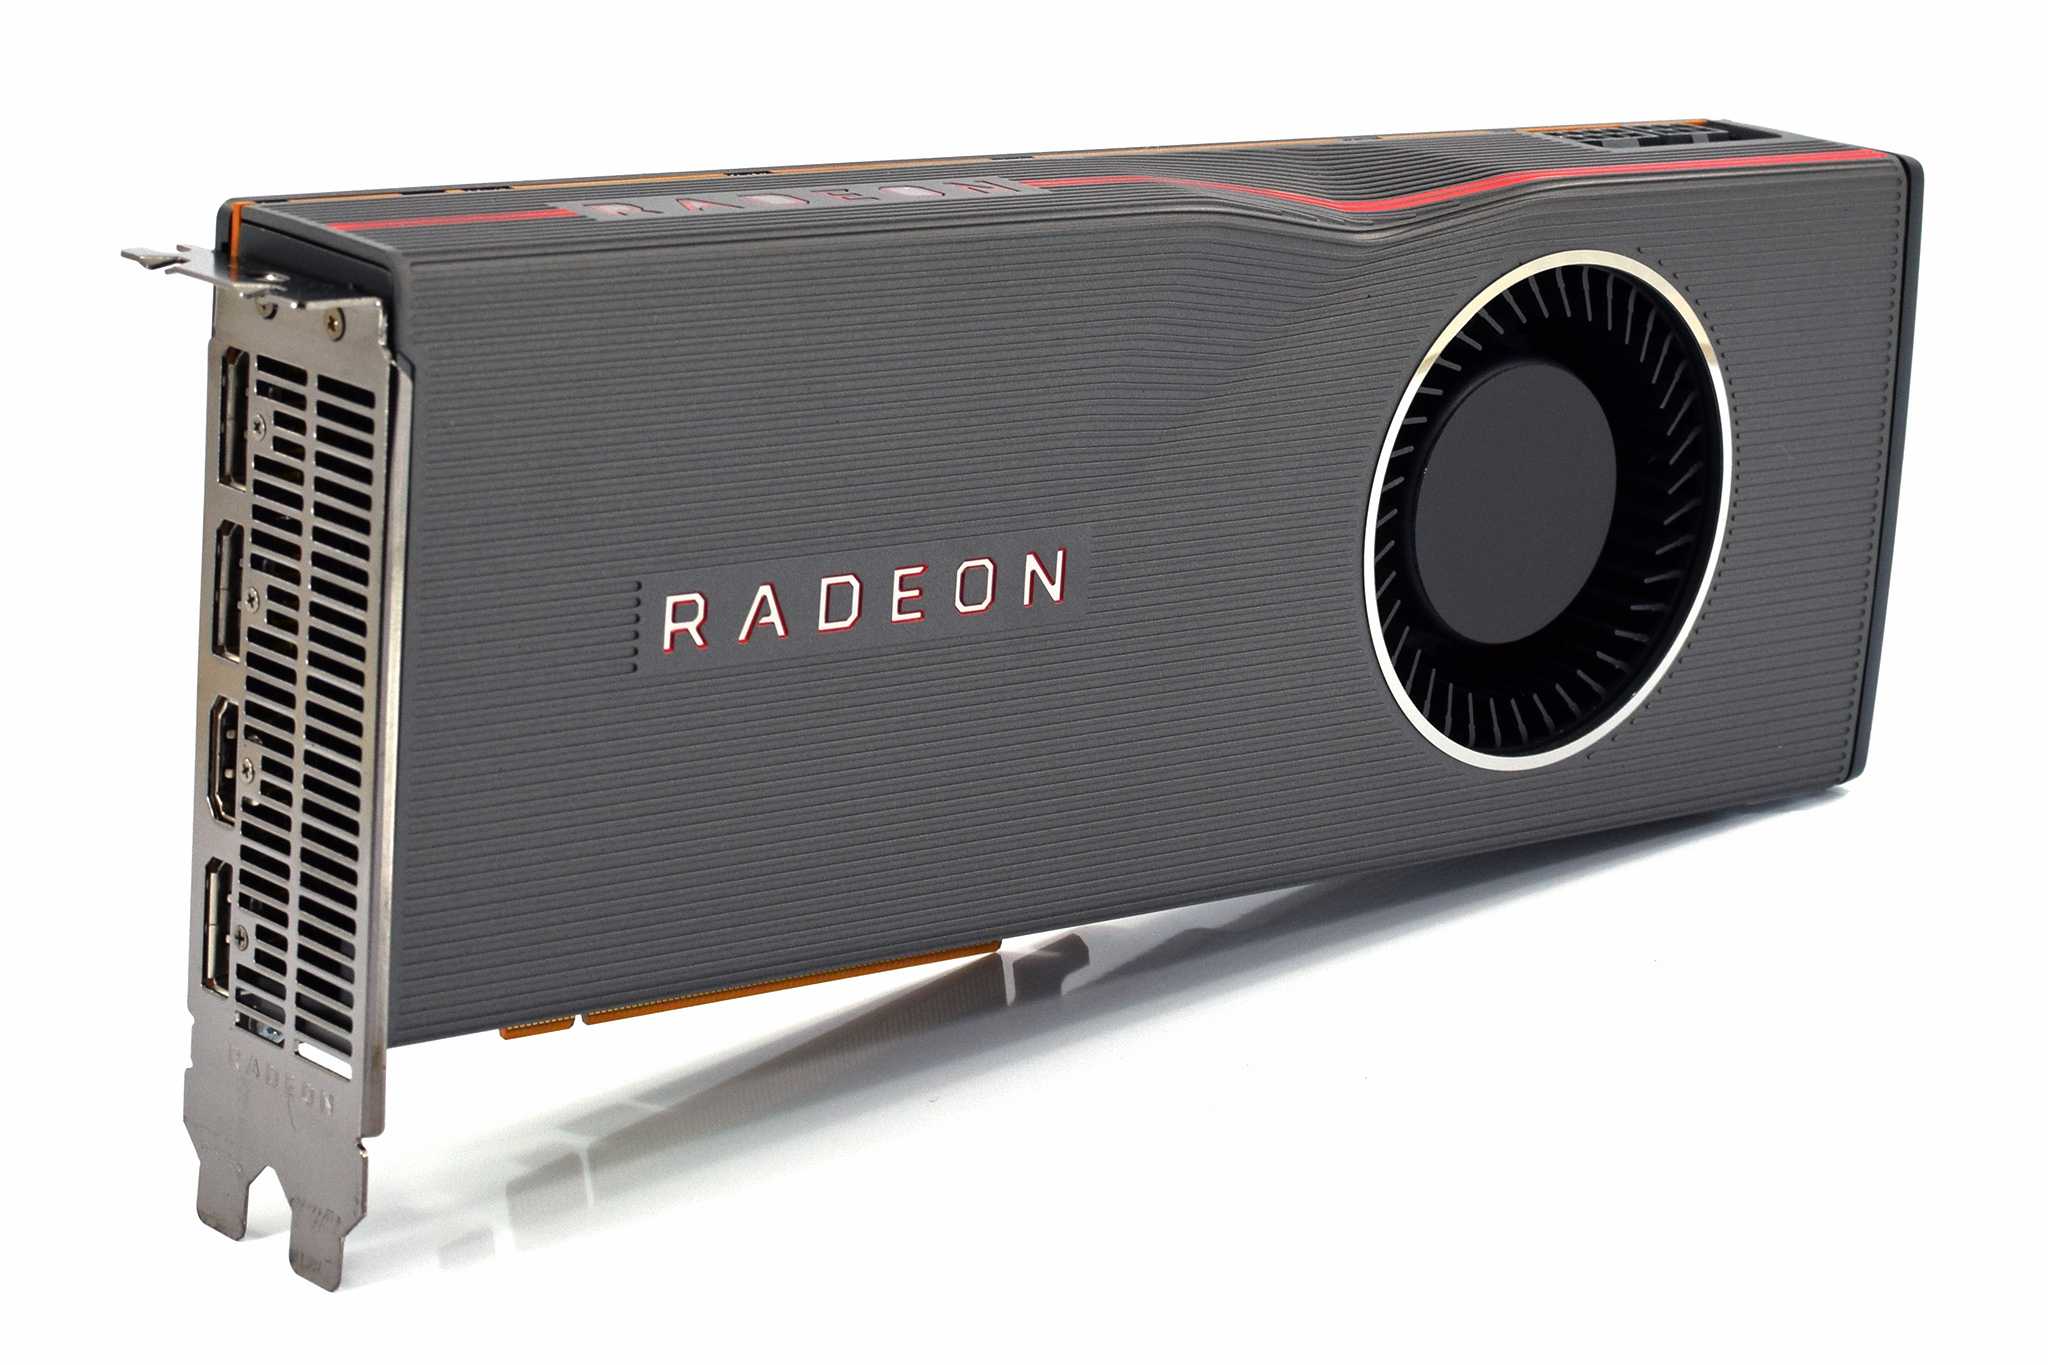 Radeon rx 5700 gaming